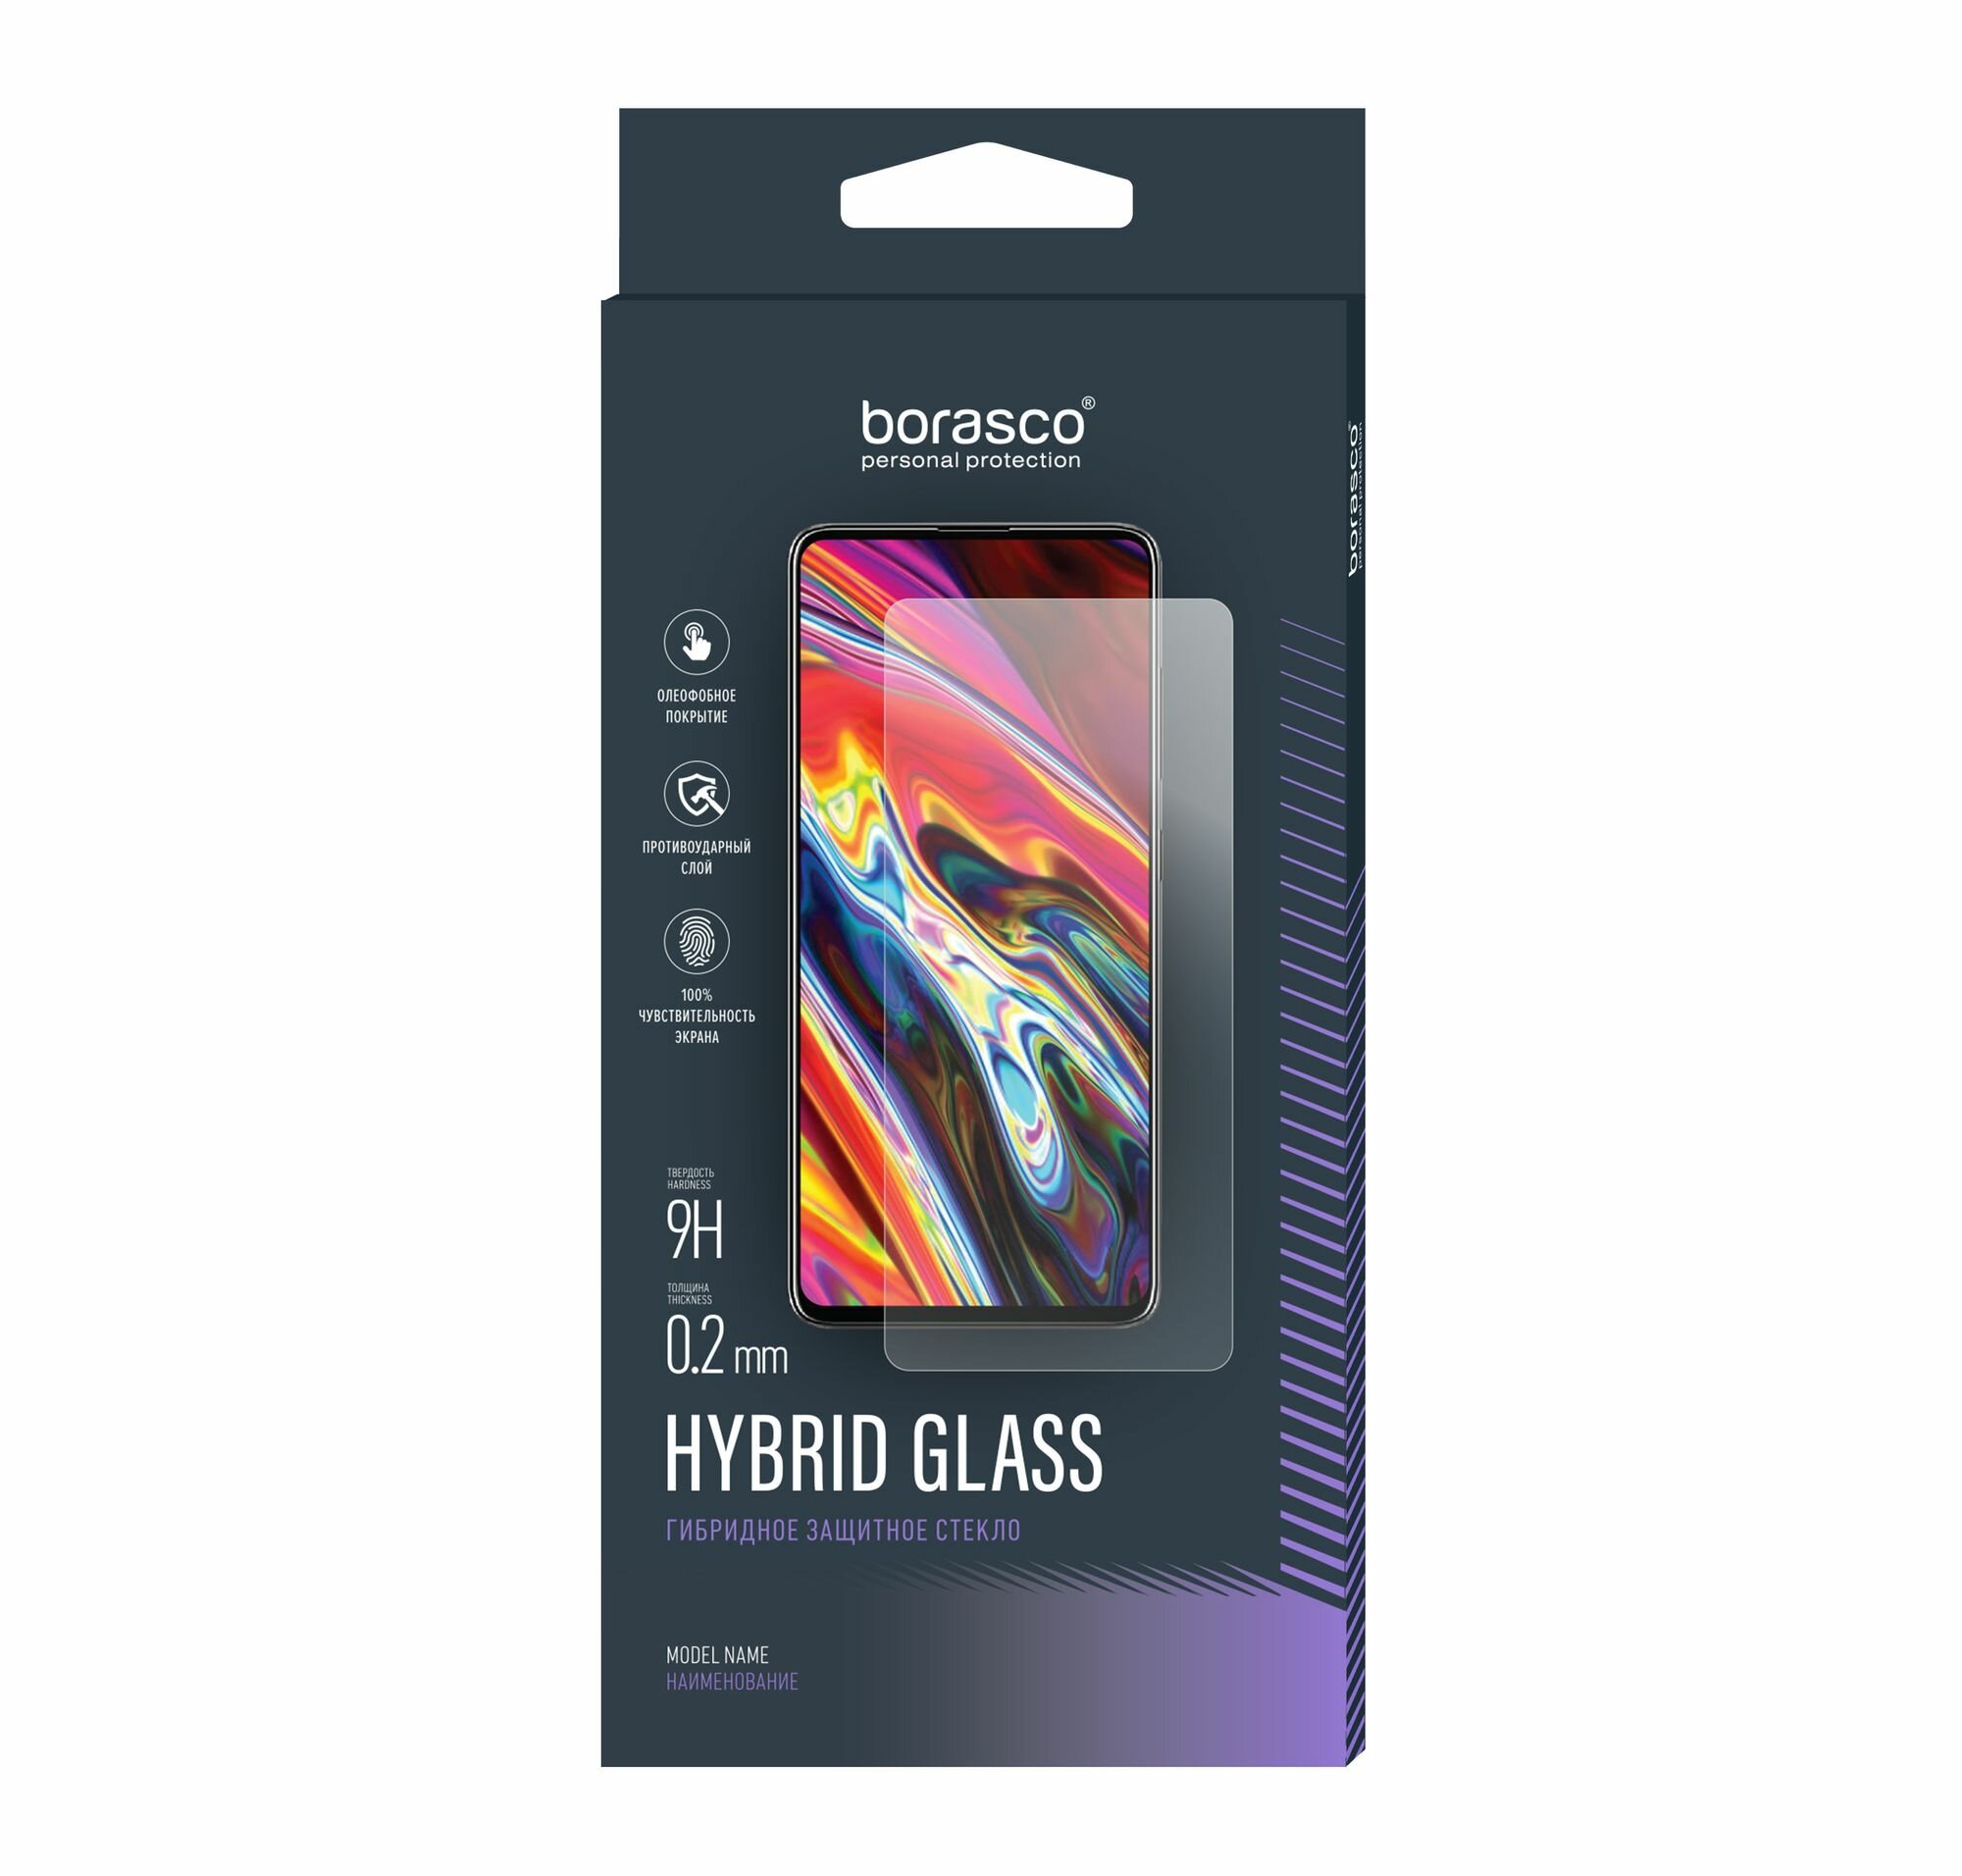 Стекло защитное Hybrid Glass VSP 026 мм для ASUS Zenfone Max Pro M2 ZB631KL